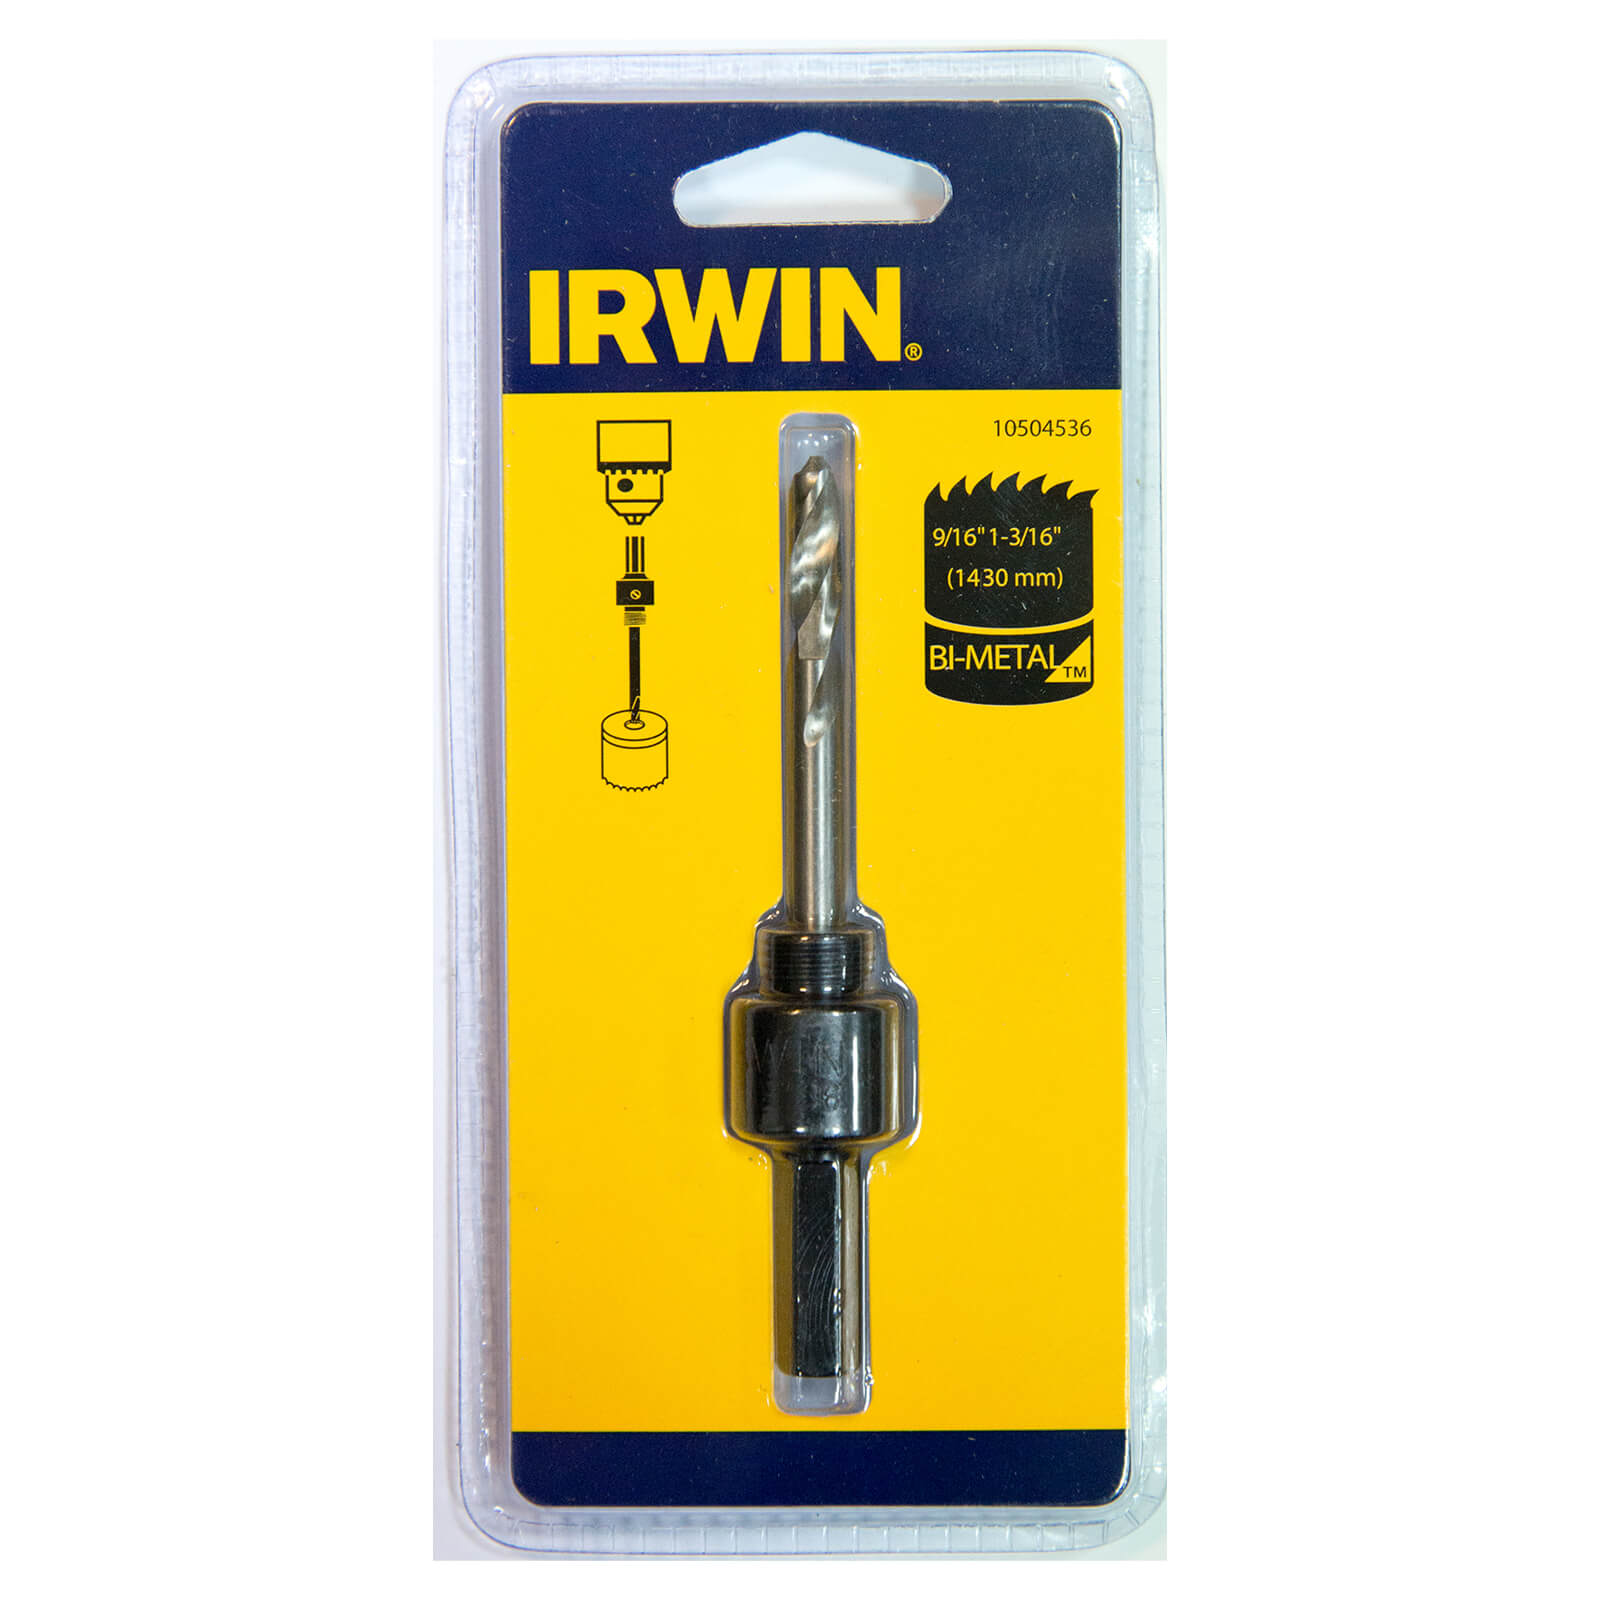 IRWIN Arbor (Mandrel) - 9.5mm, fits Hole Saws 14-30mm